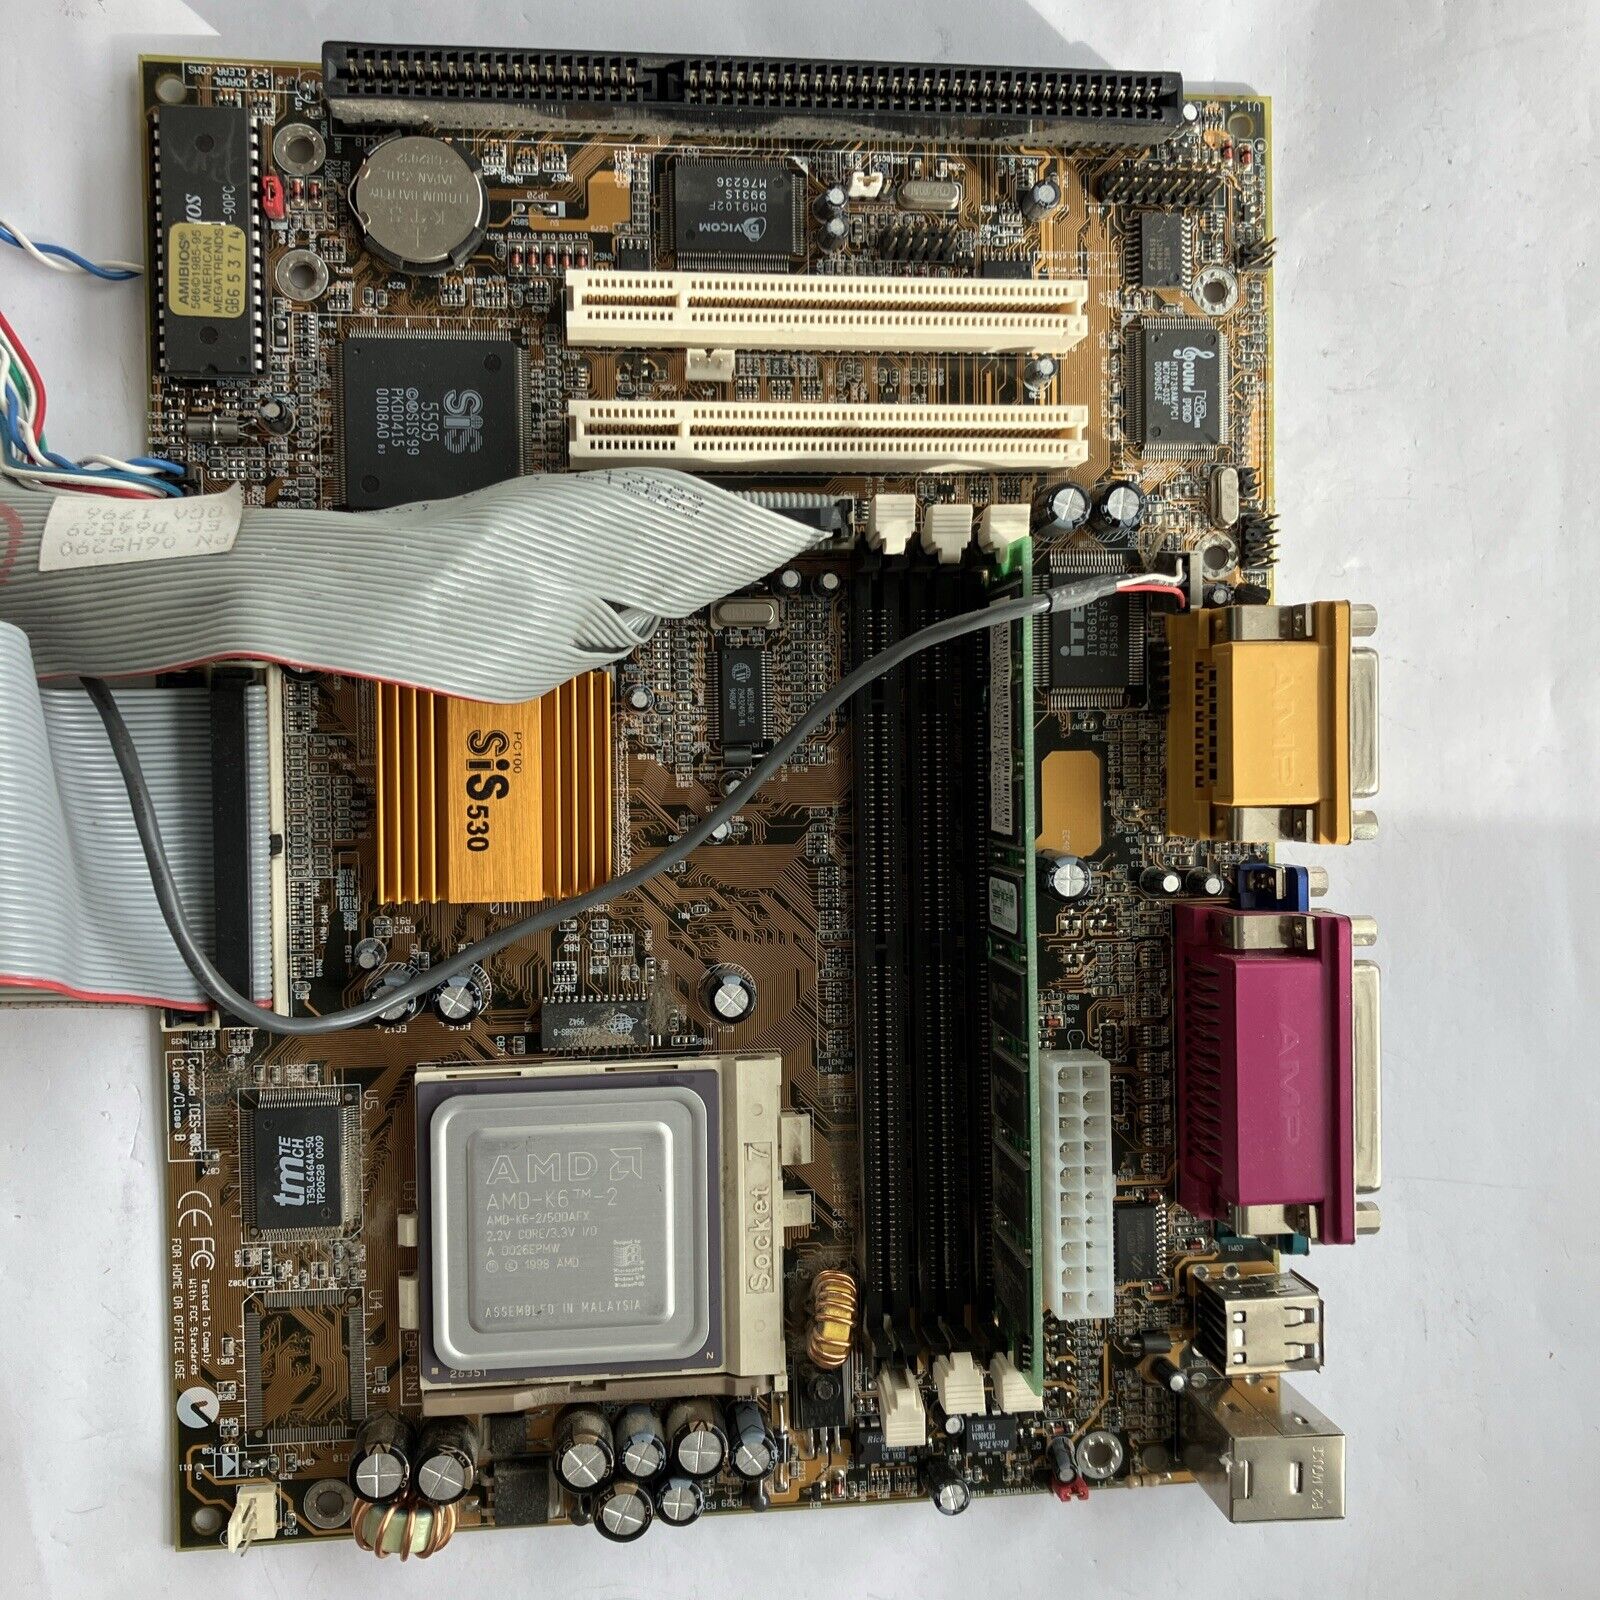 Motherboard SIS 530 AMD-K6 2 Processor vintage computer See Pic￼